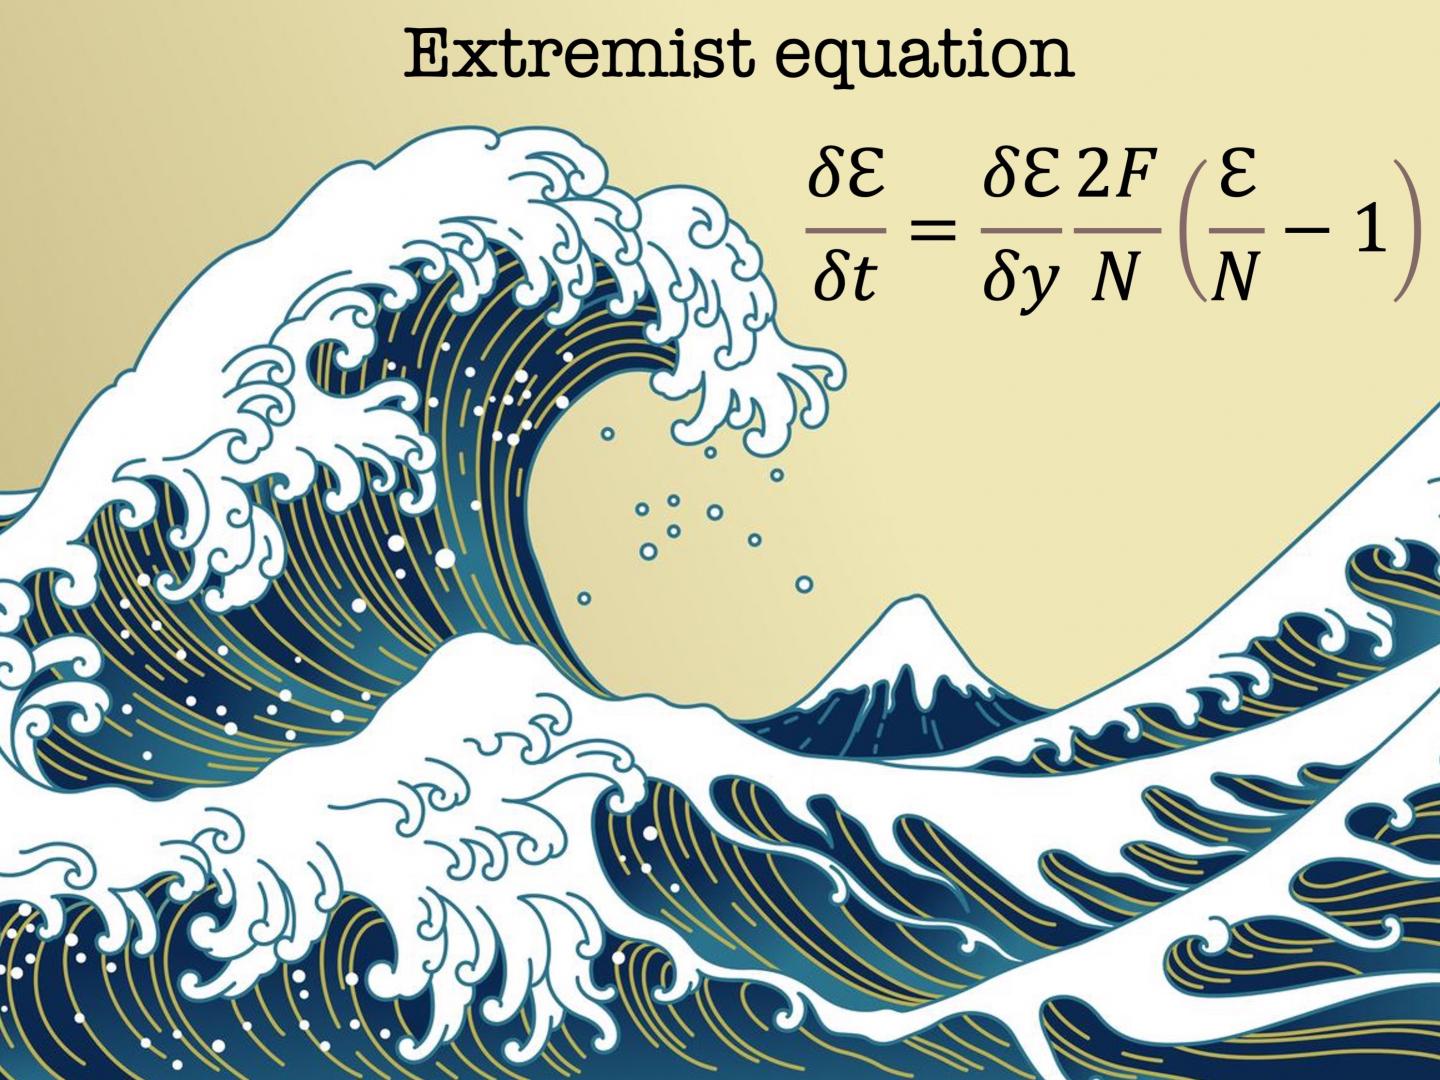 Extremist equation